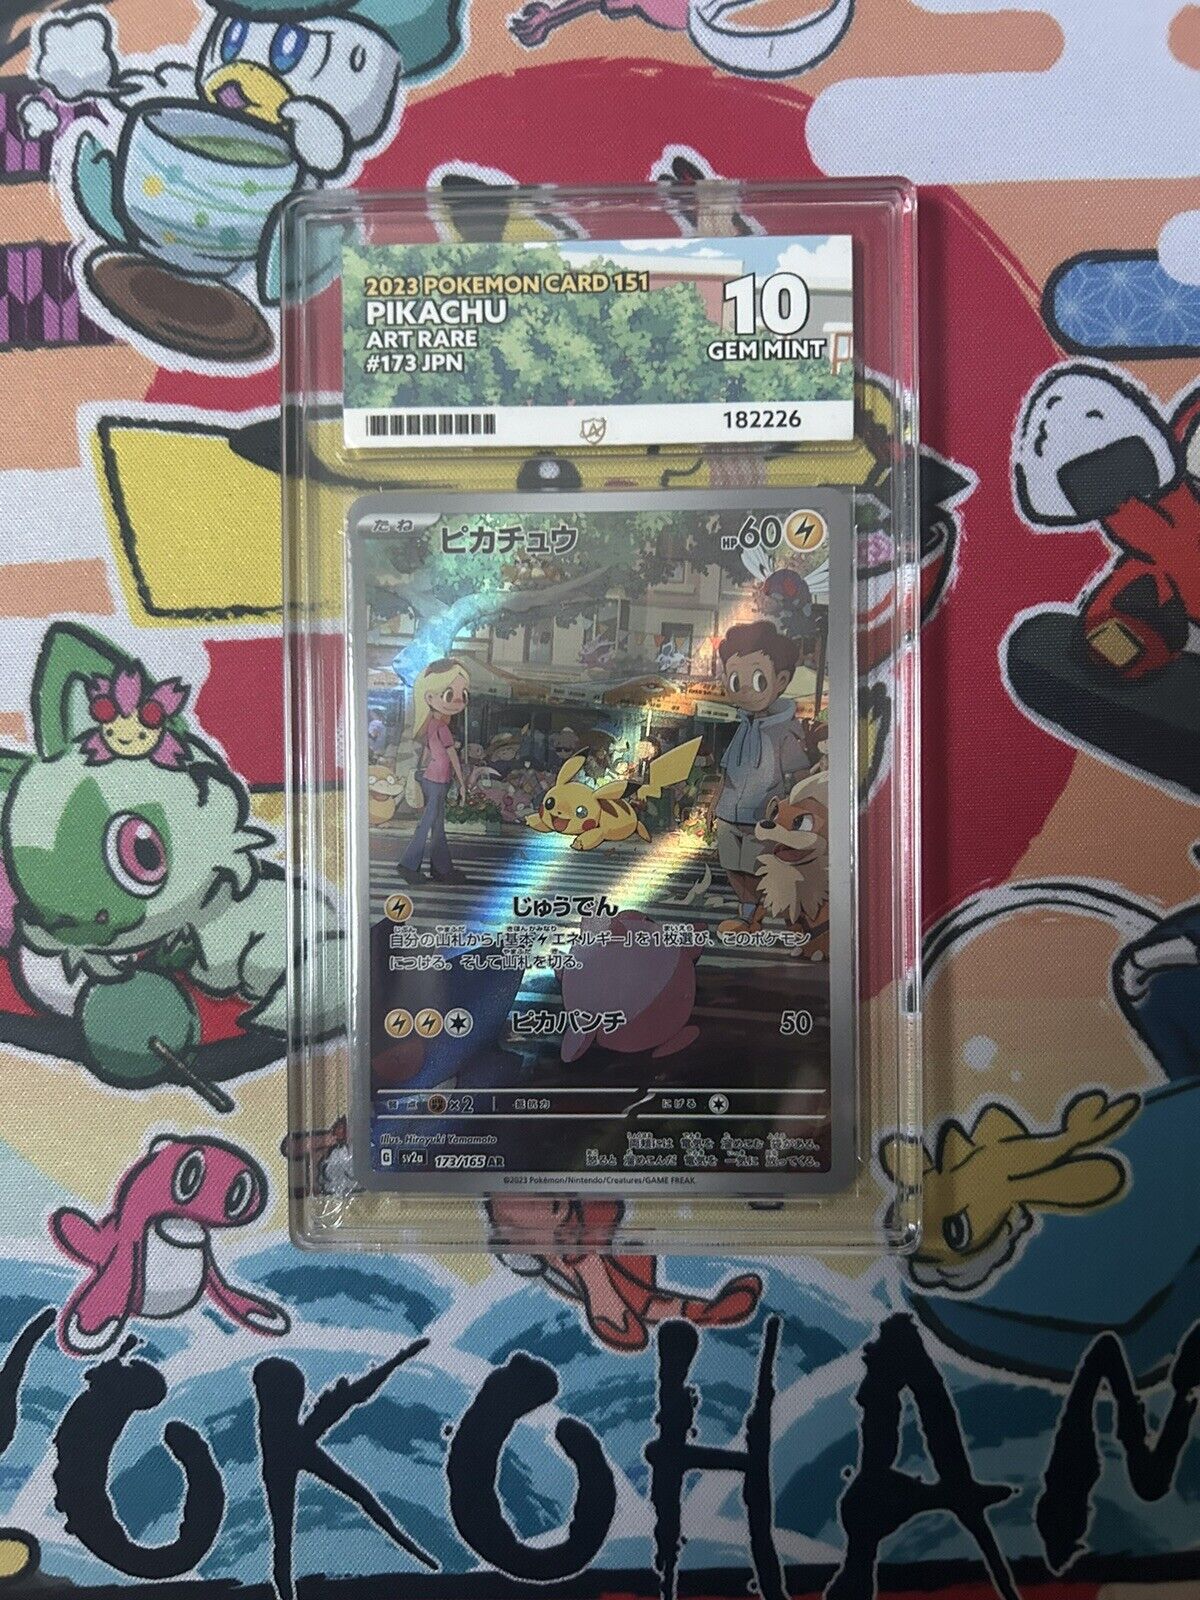 Pikachu 173/165 Art Rare Holo Pokemon Card 151 Japanese GEM MINT ACE 10